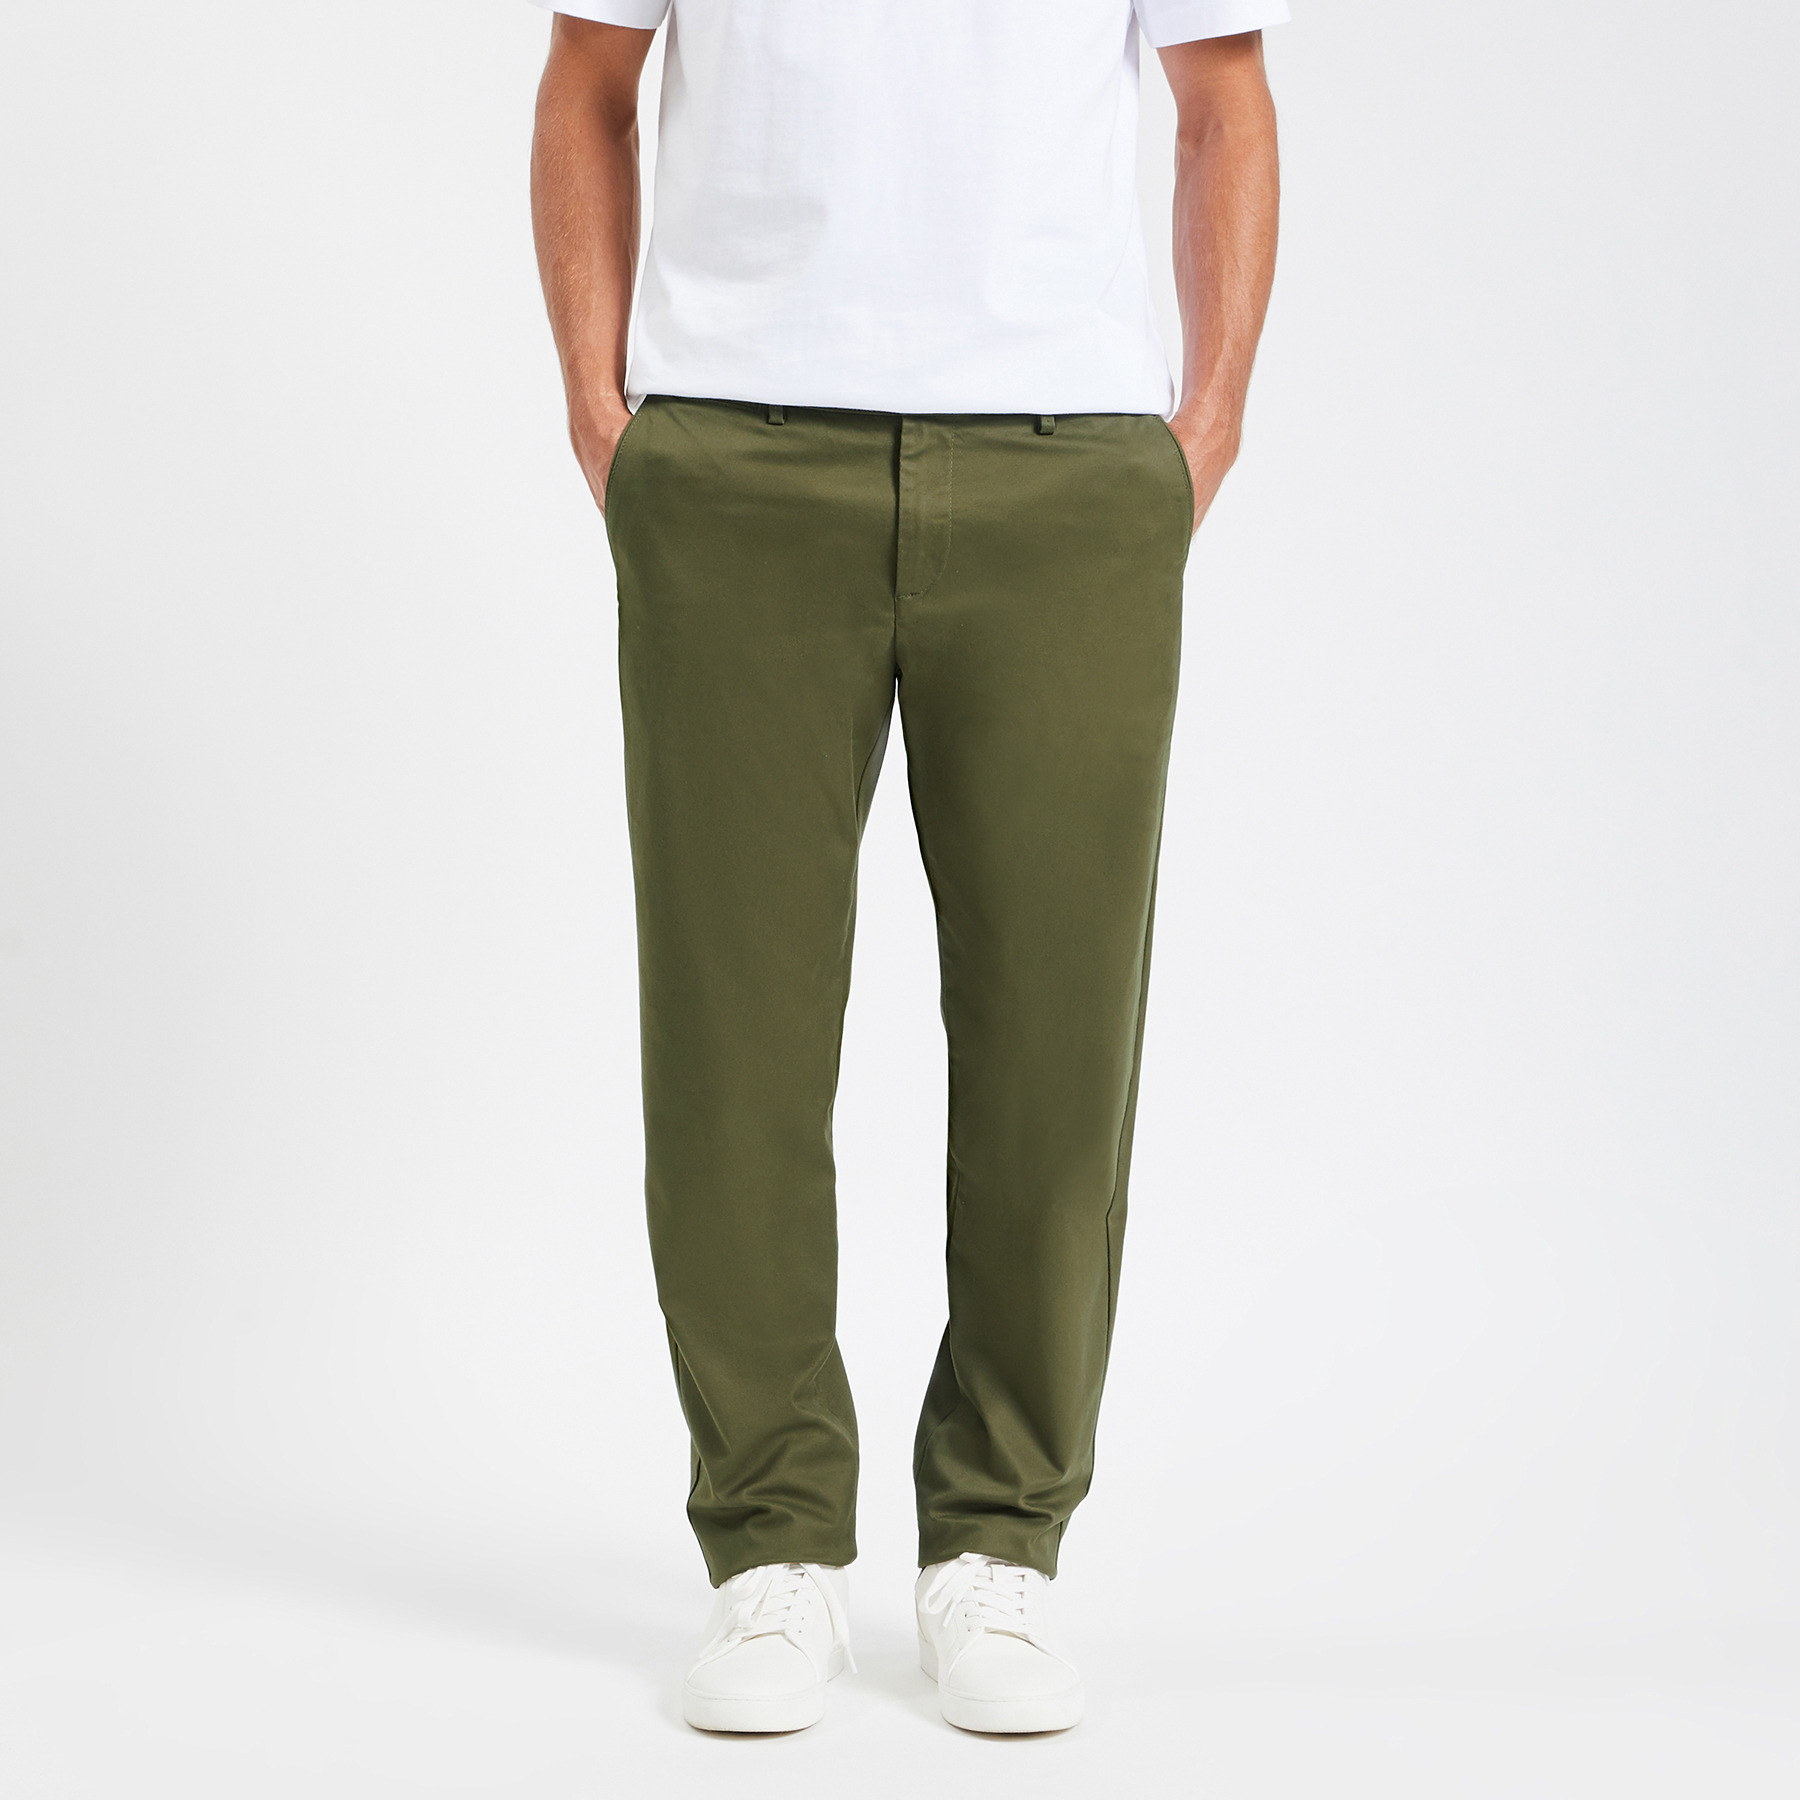 Pantalon chino regular "le parfait by JULES" Vert kaki 42 98% Coton, 2% Elasthanne Homme Brice